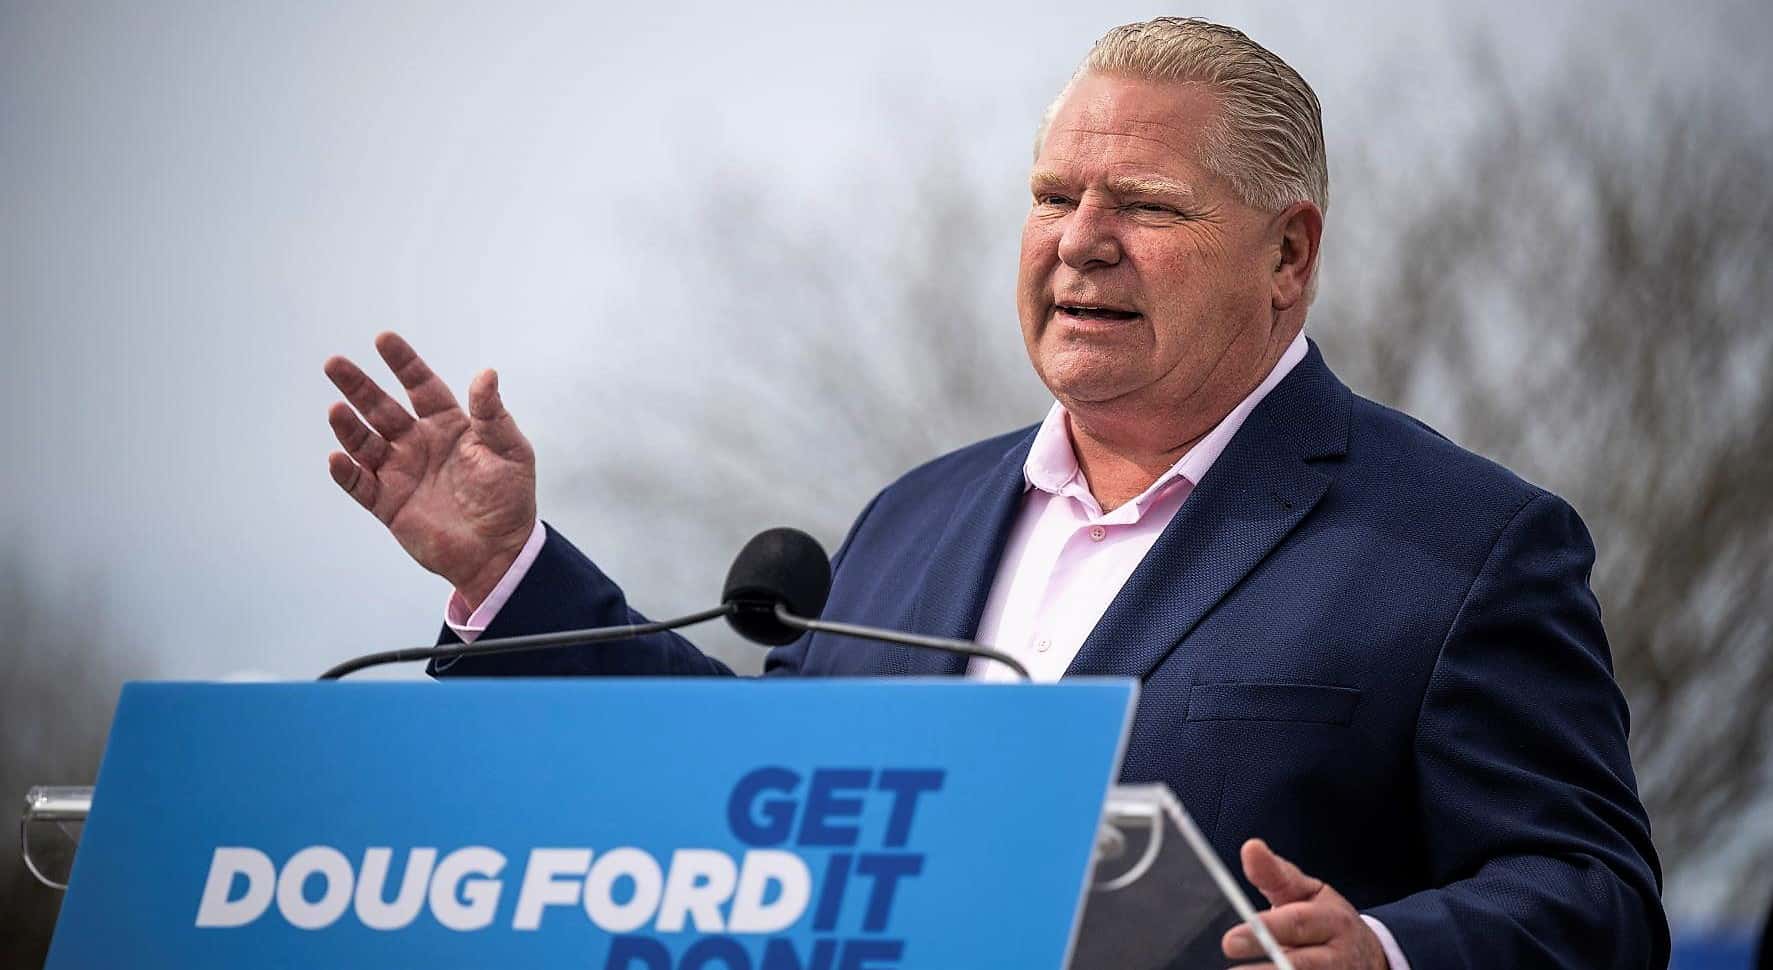 Premier Doug Ford to make transportation announcement in Hamilton